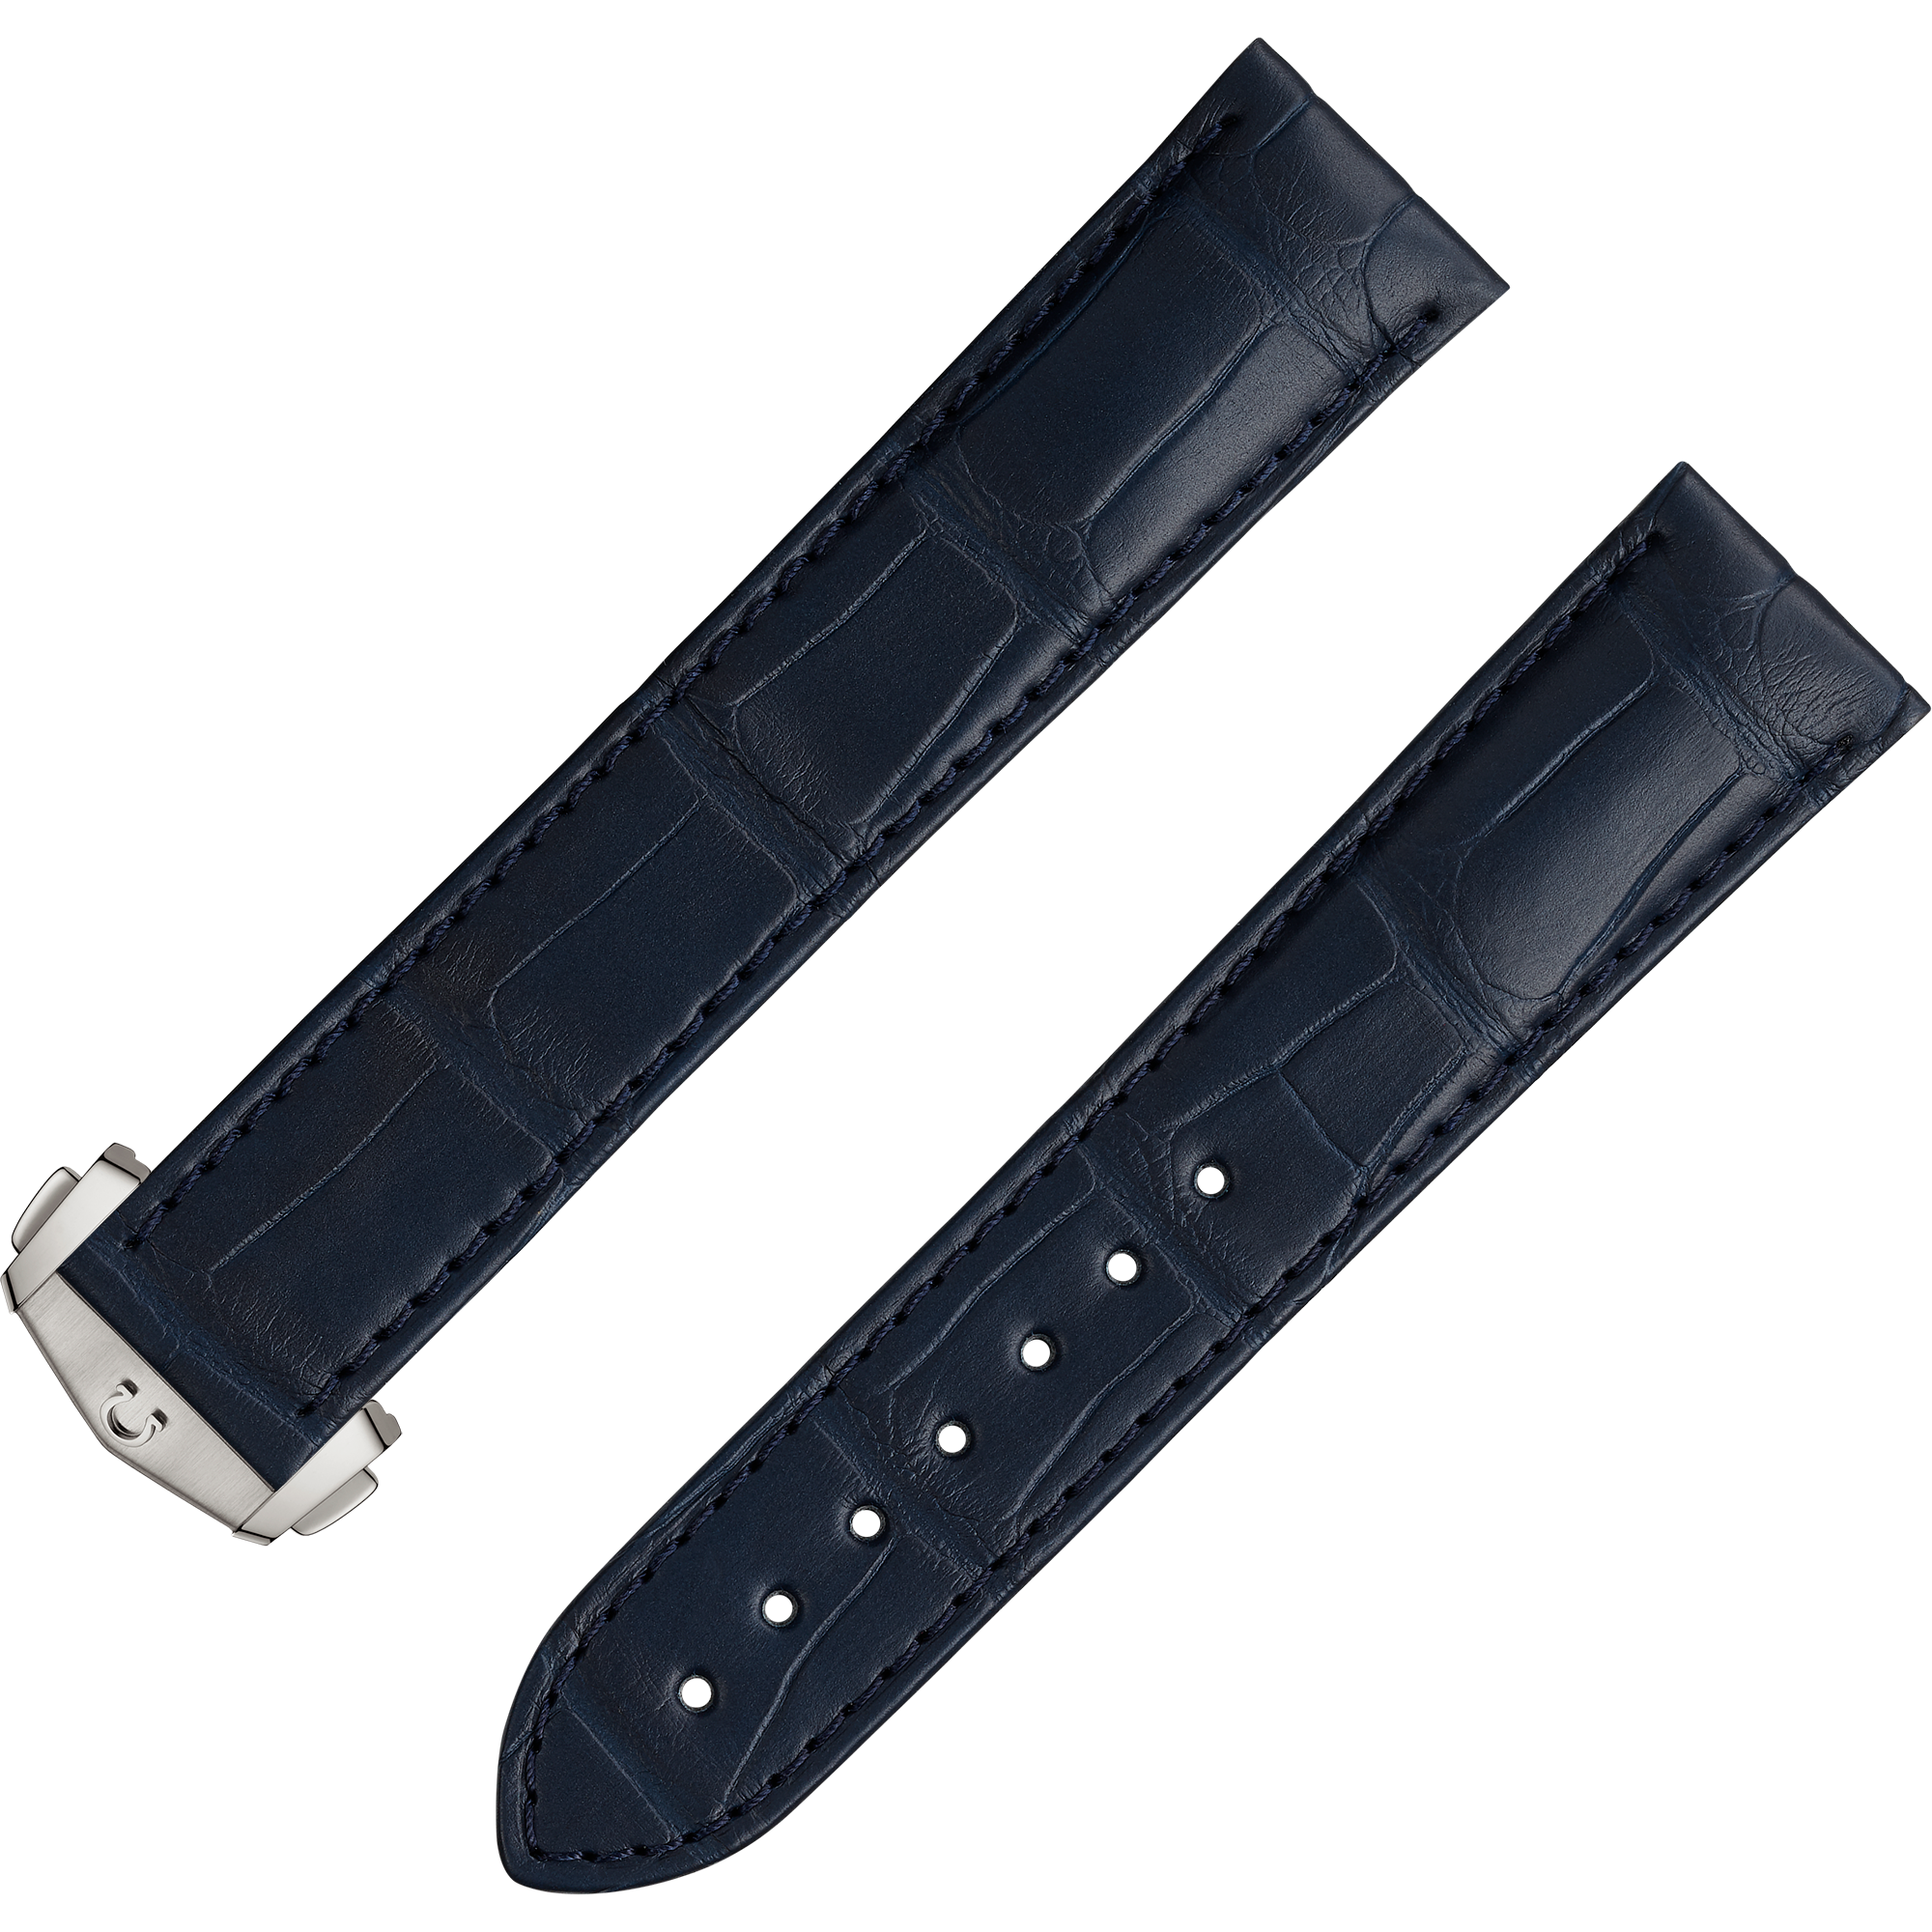 Two-piece strap - Dark blue alligator leather strap with foldover clasp - 032CUZ007465W